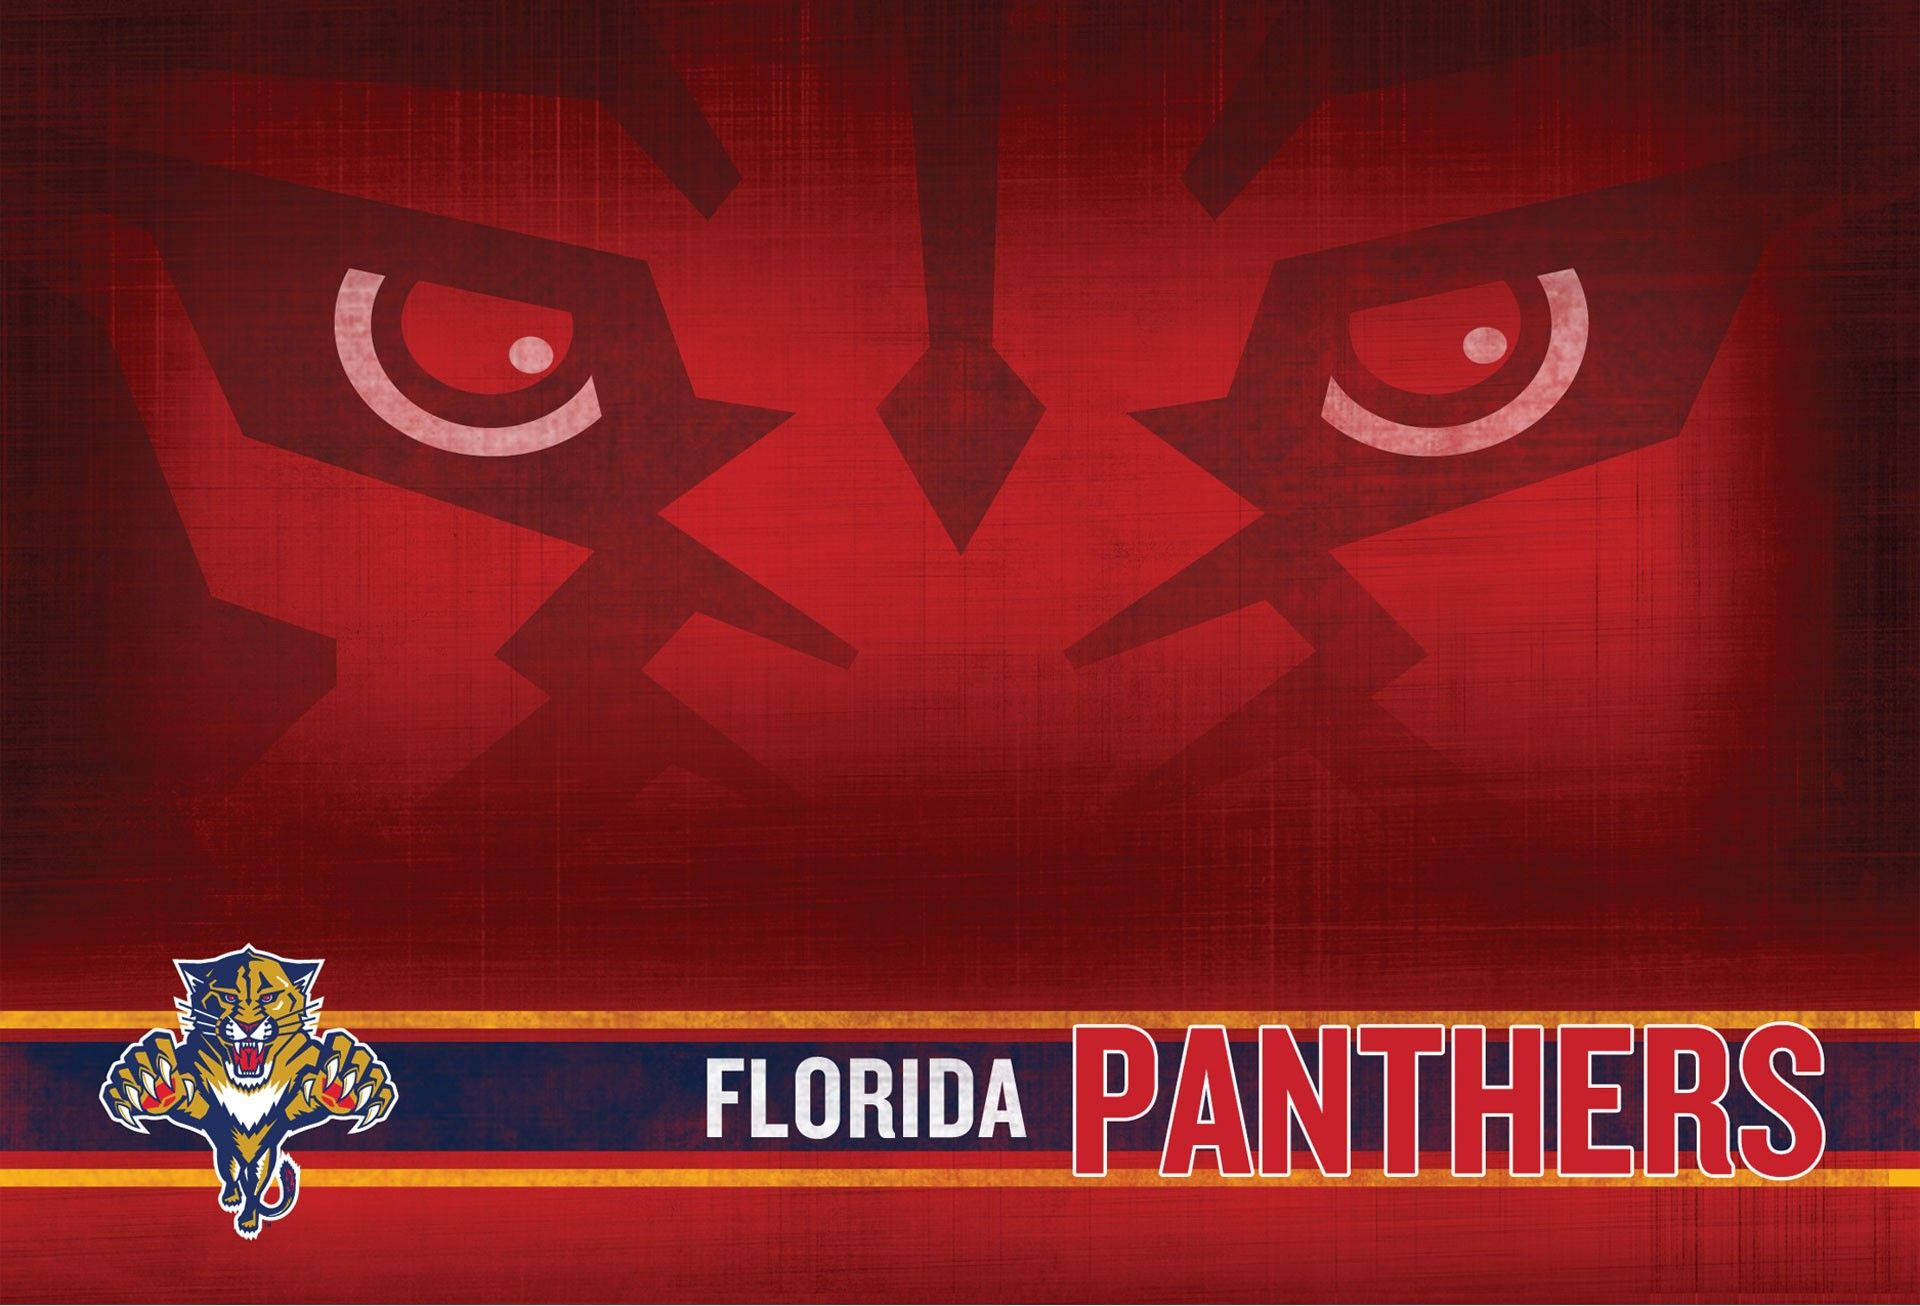 Florida Panthers Red Banner Wallpaper